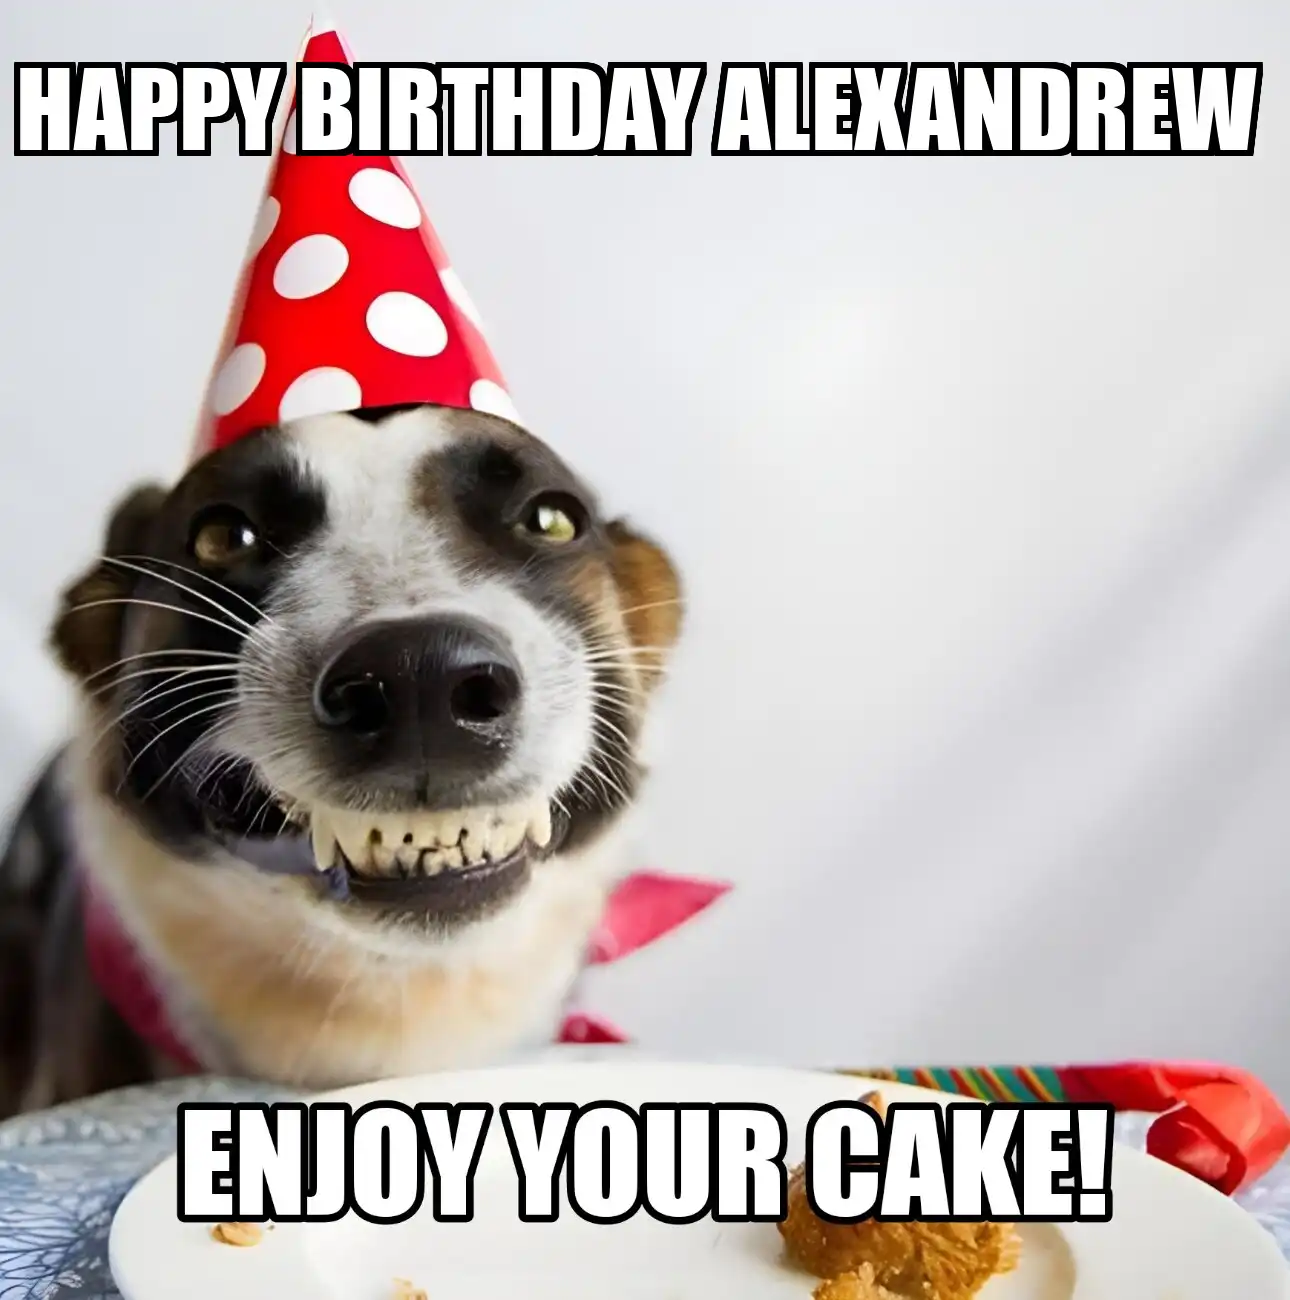 Happy Birthday Alexandrew Enjoy Your Cake Dog Meme